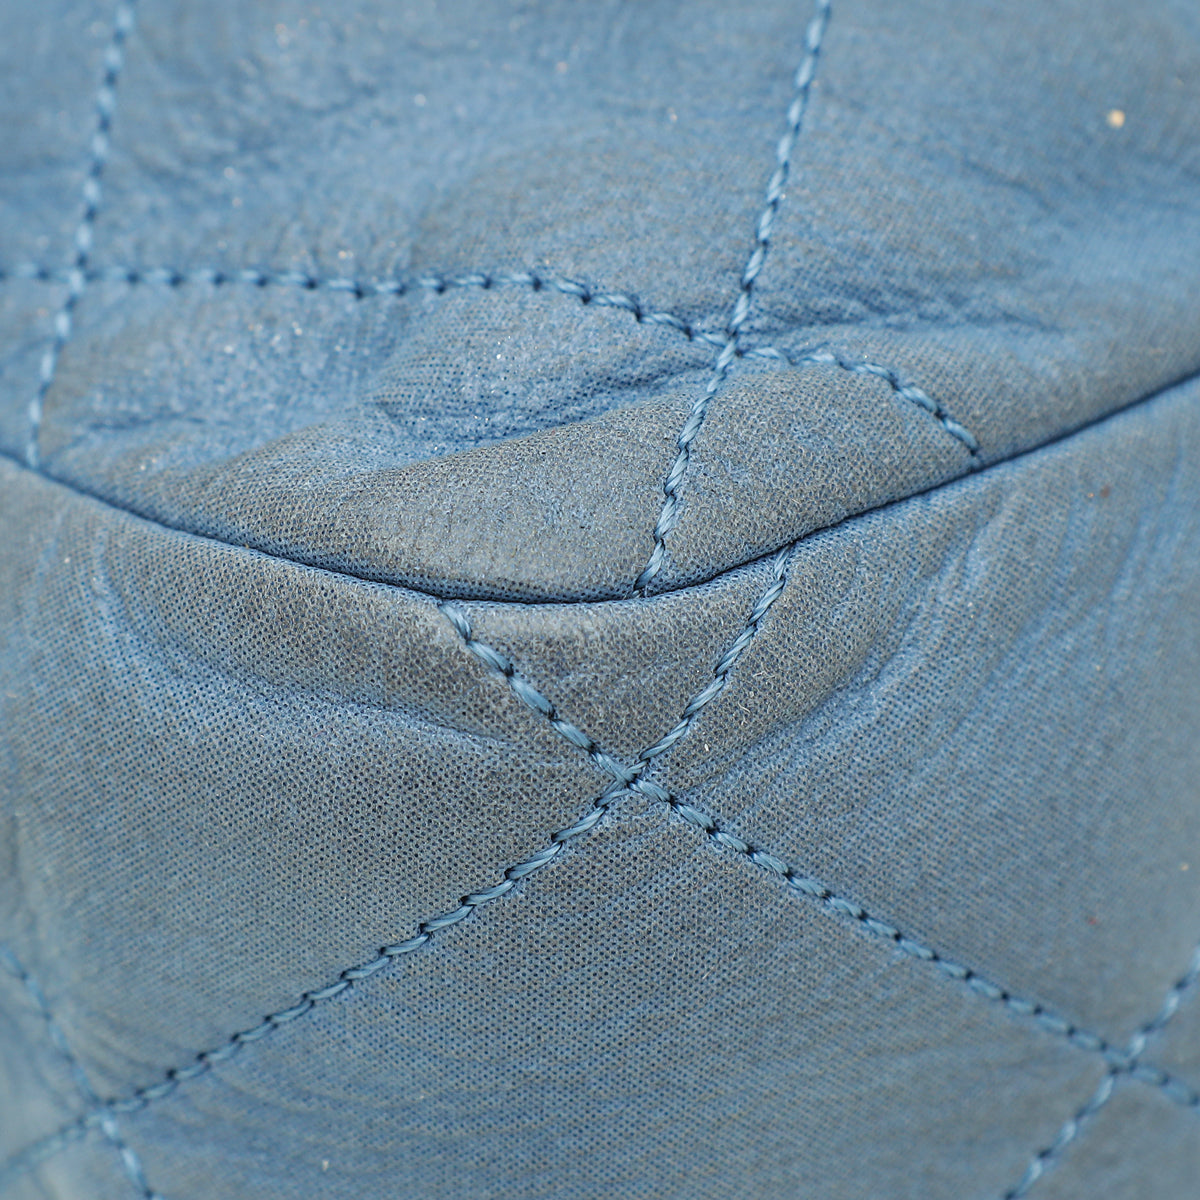 Chanel Blue CC Soft Flap Bag